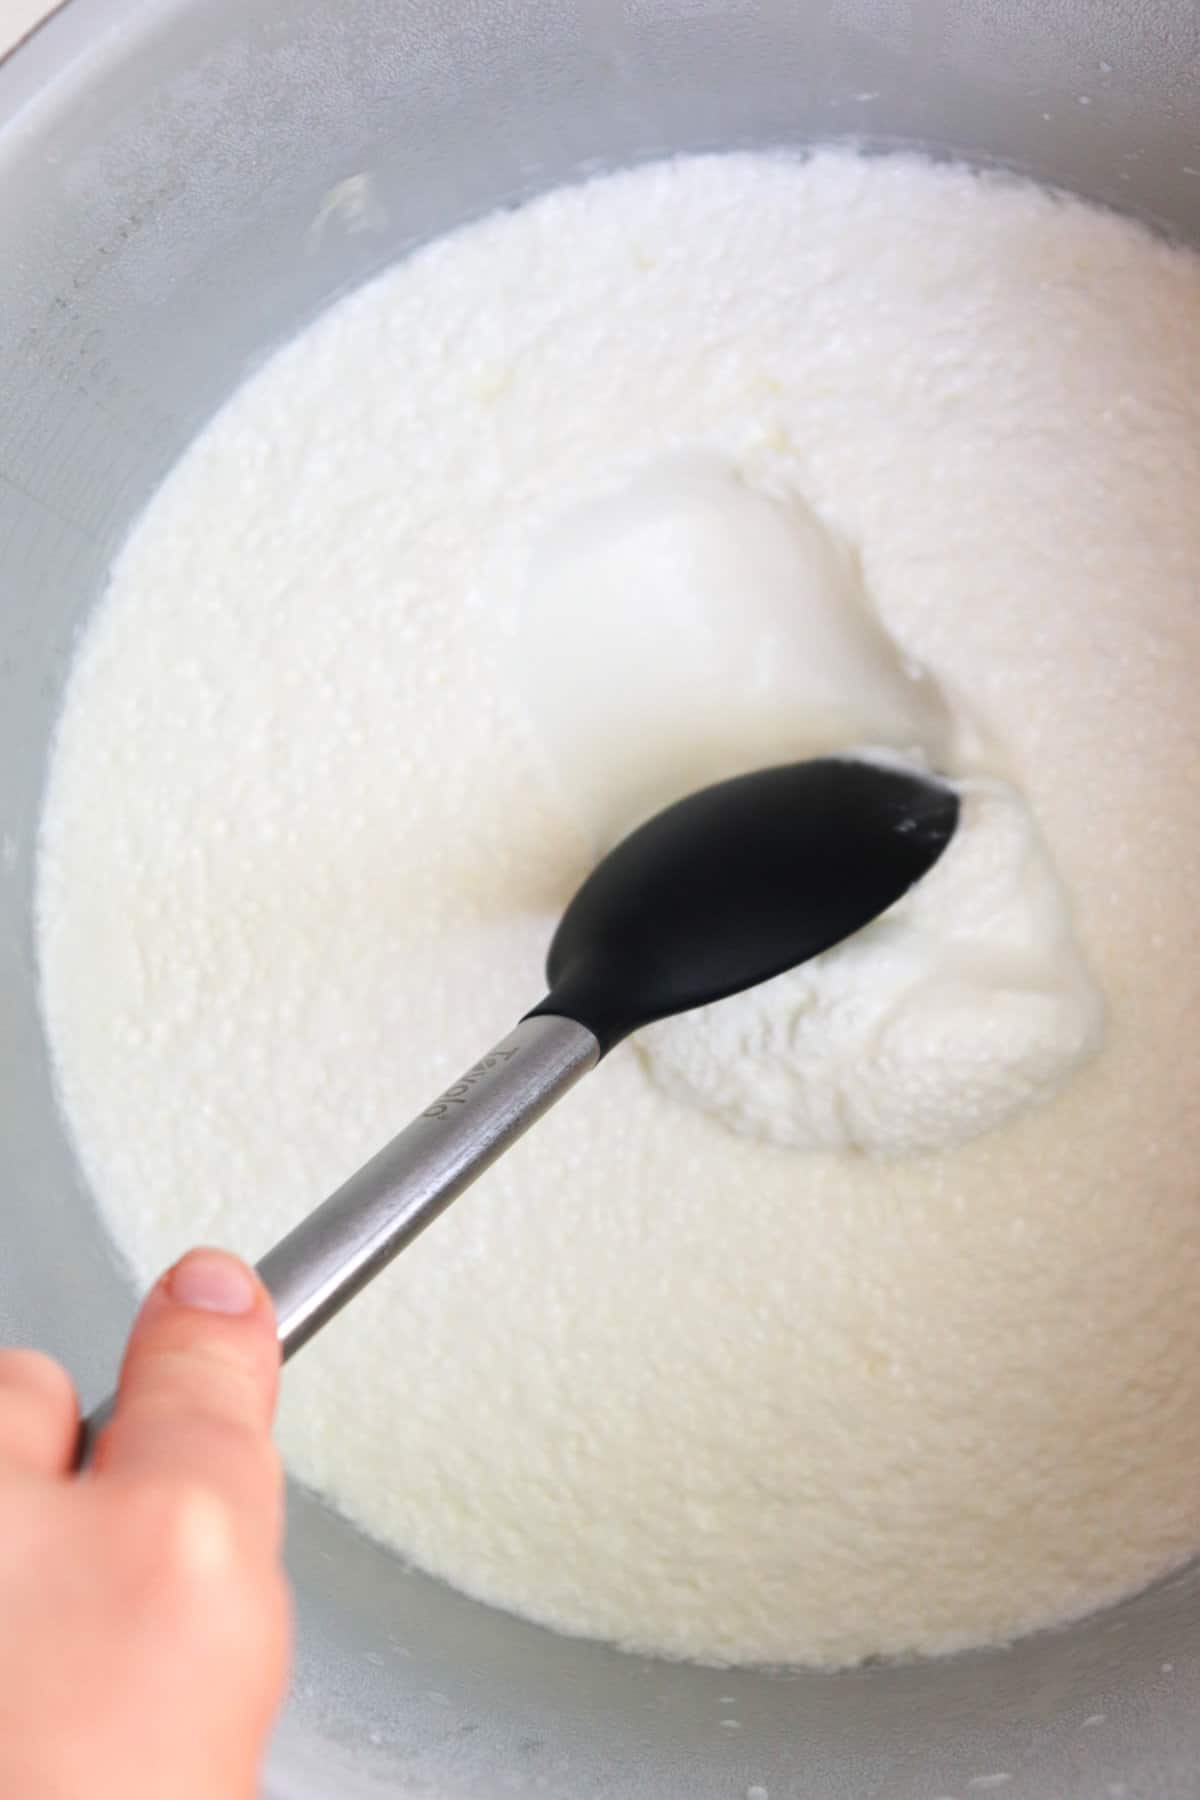 spoon showing consistency of yogurt in the ninja foodi.